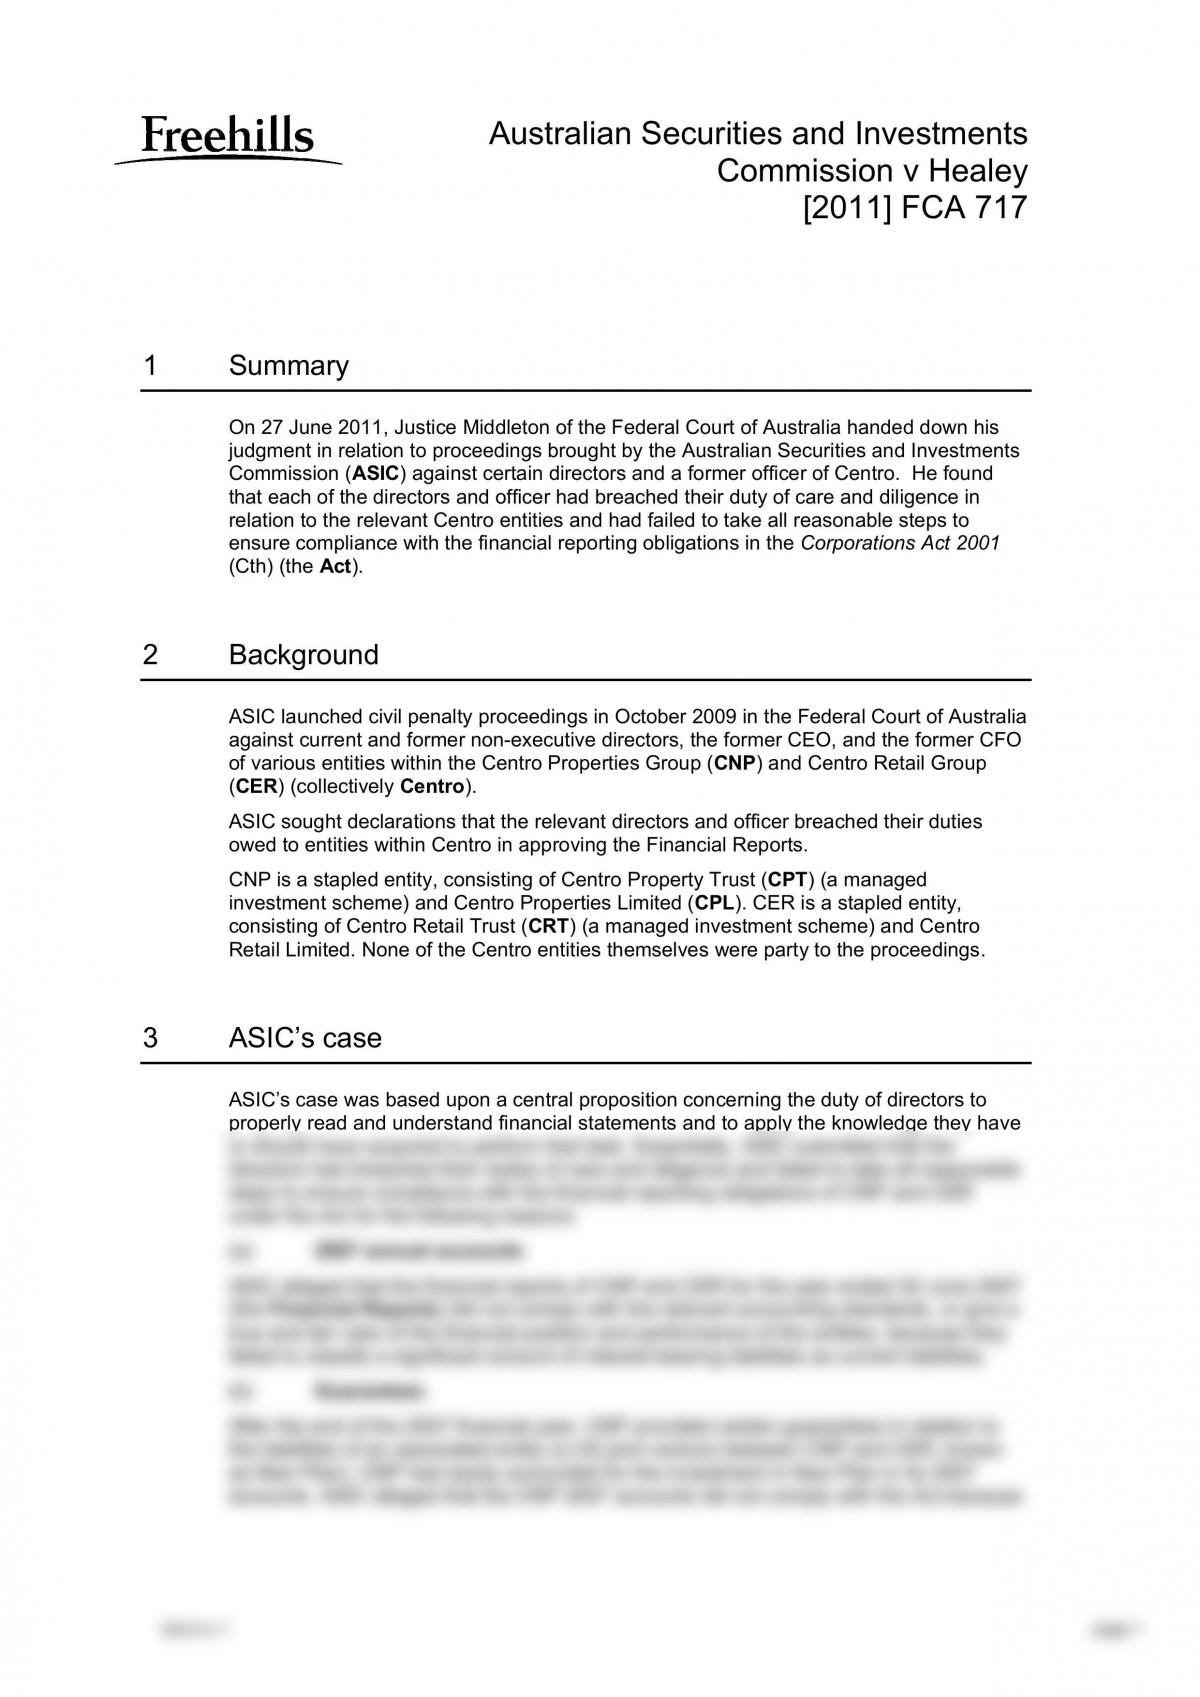 ASIC v Healey summary. - Page 1